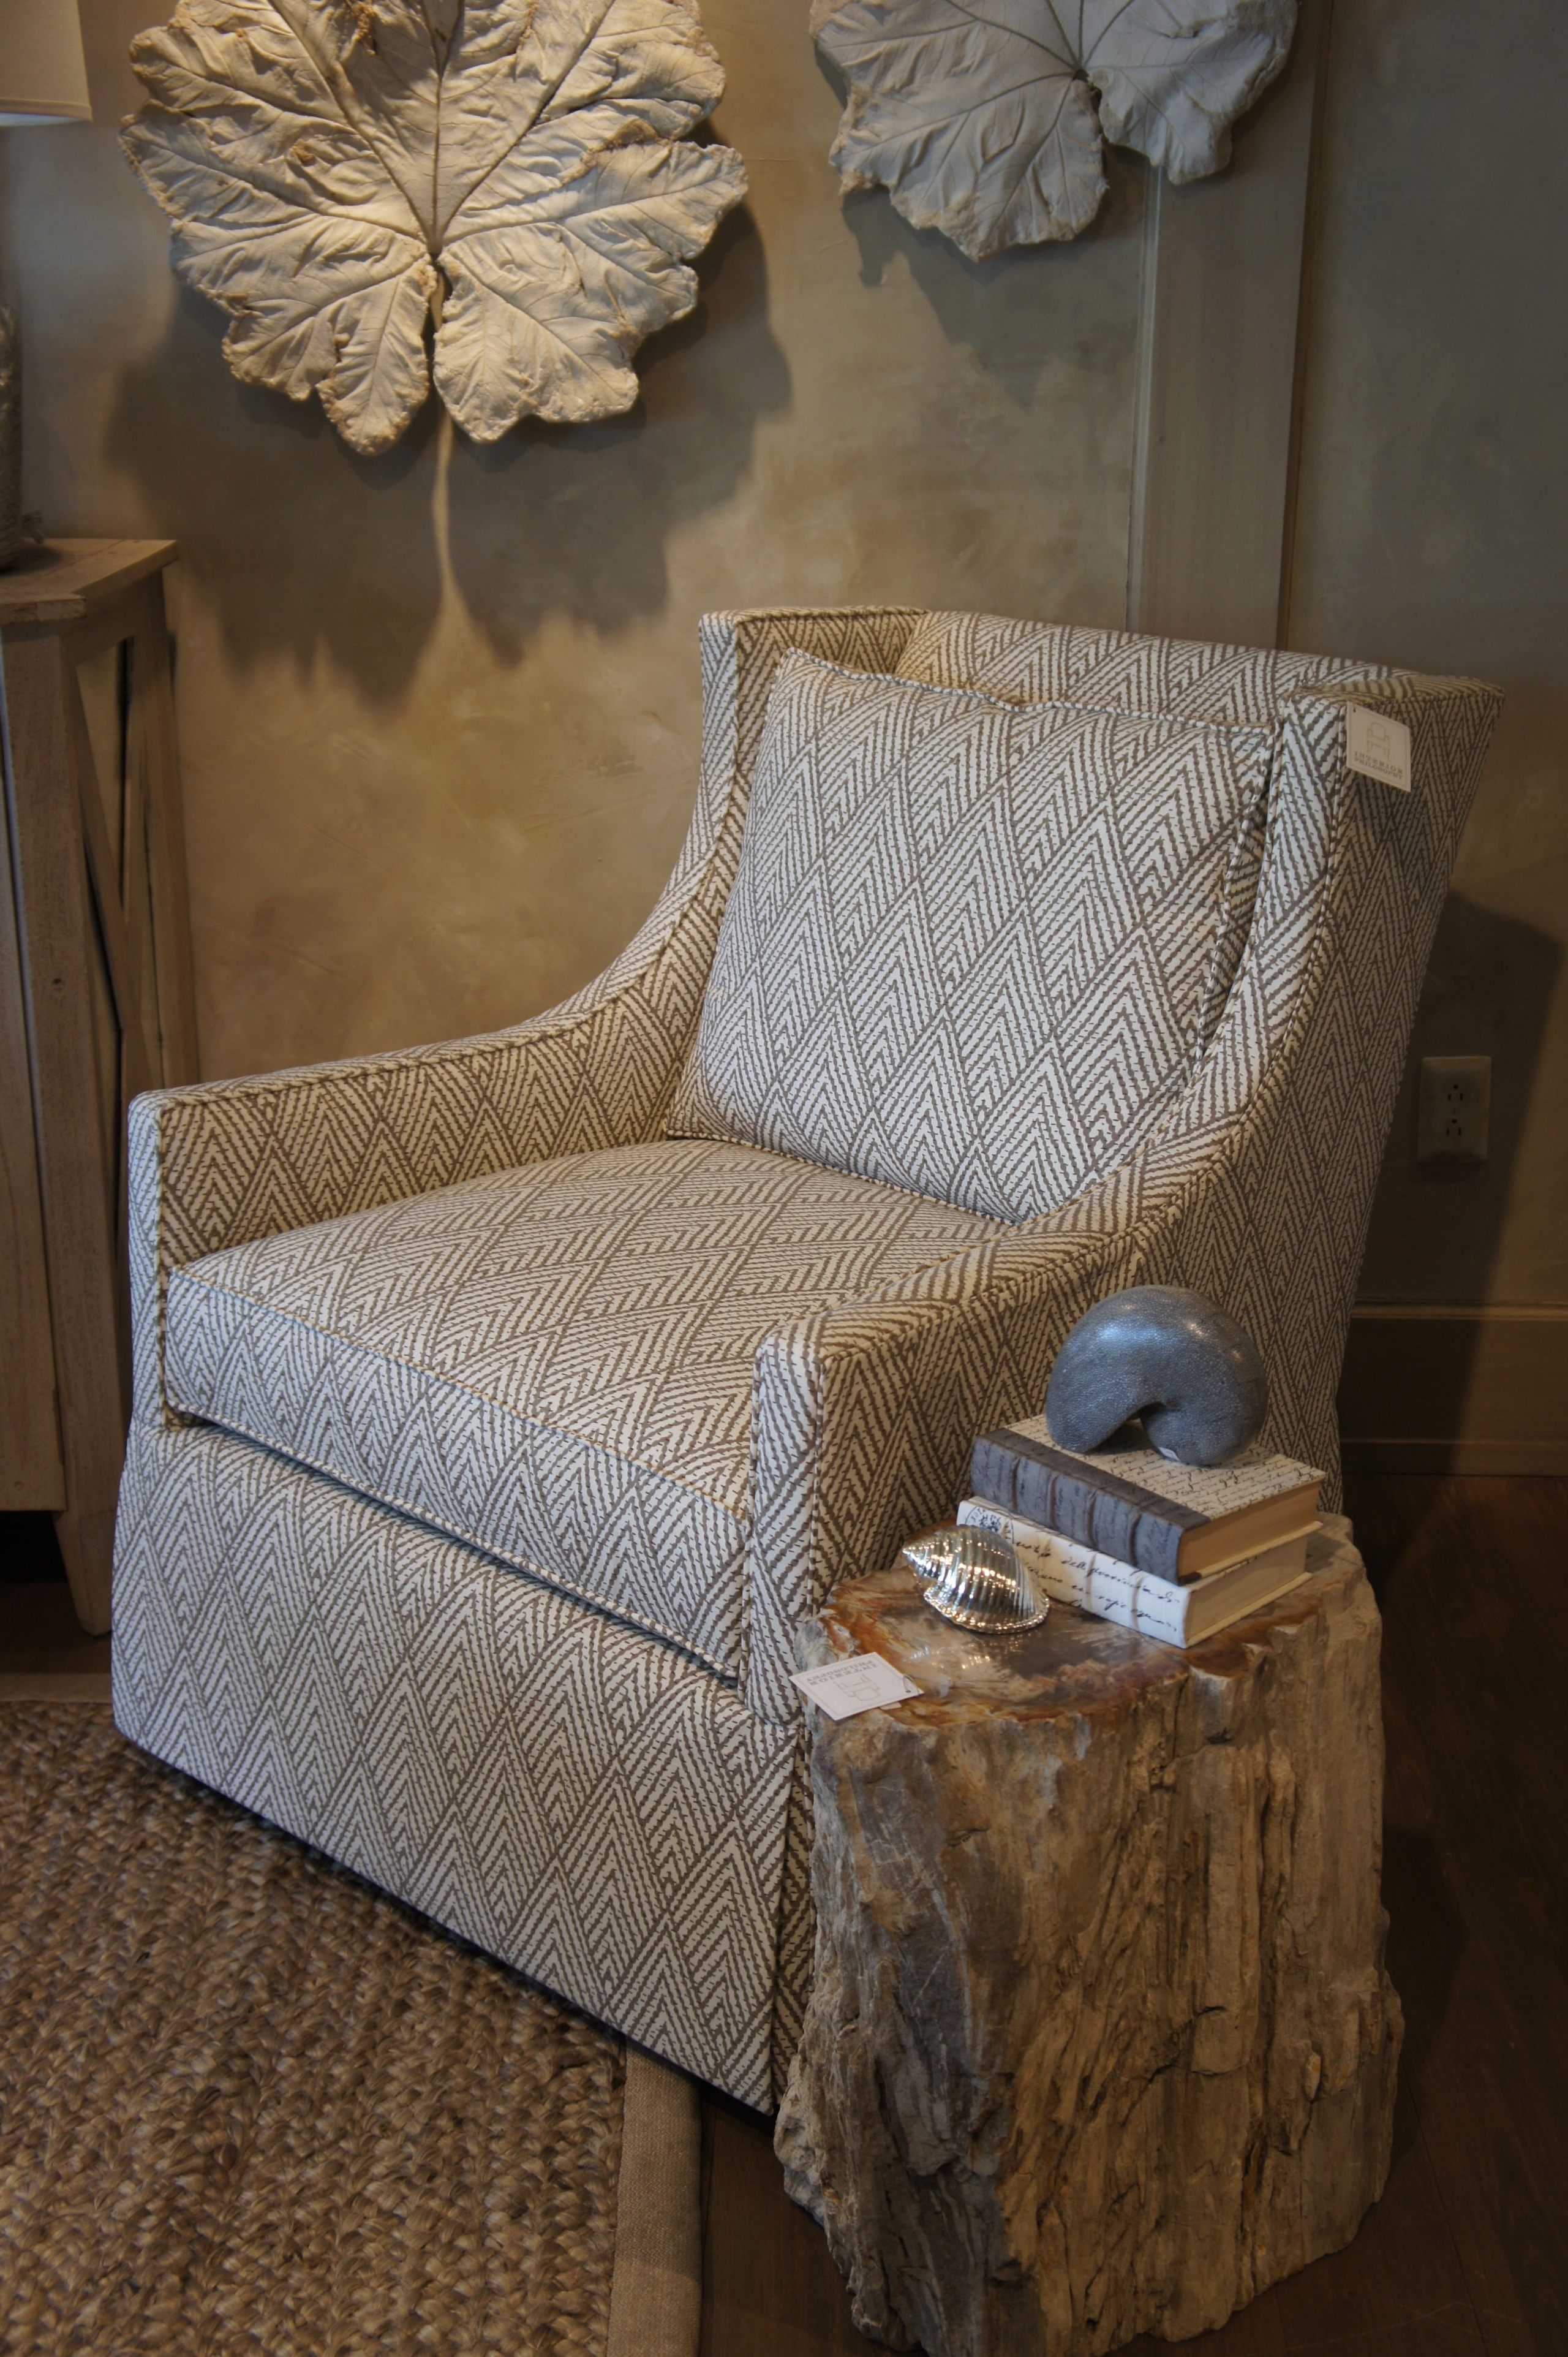 Upholstered Swivel Living Room Chairs Ideas On Foter